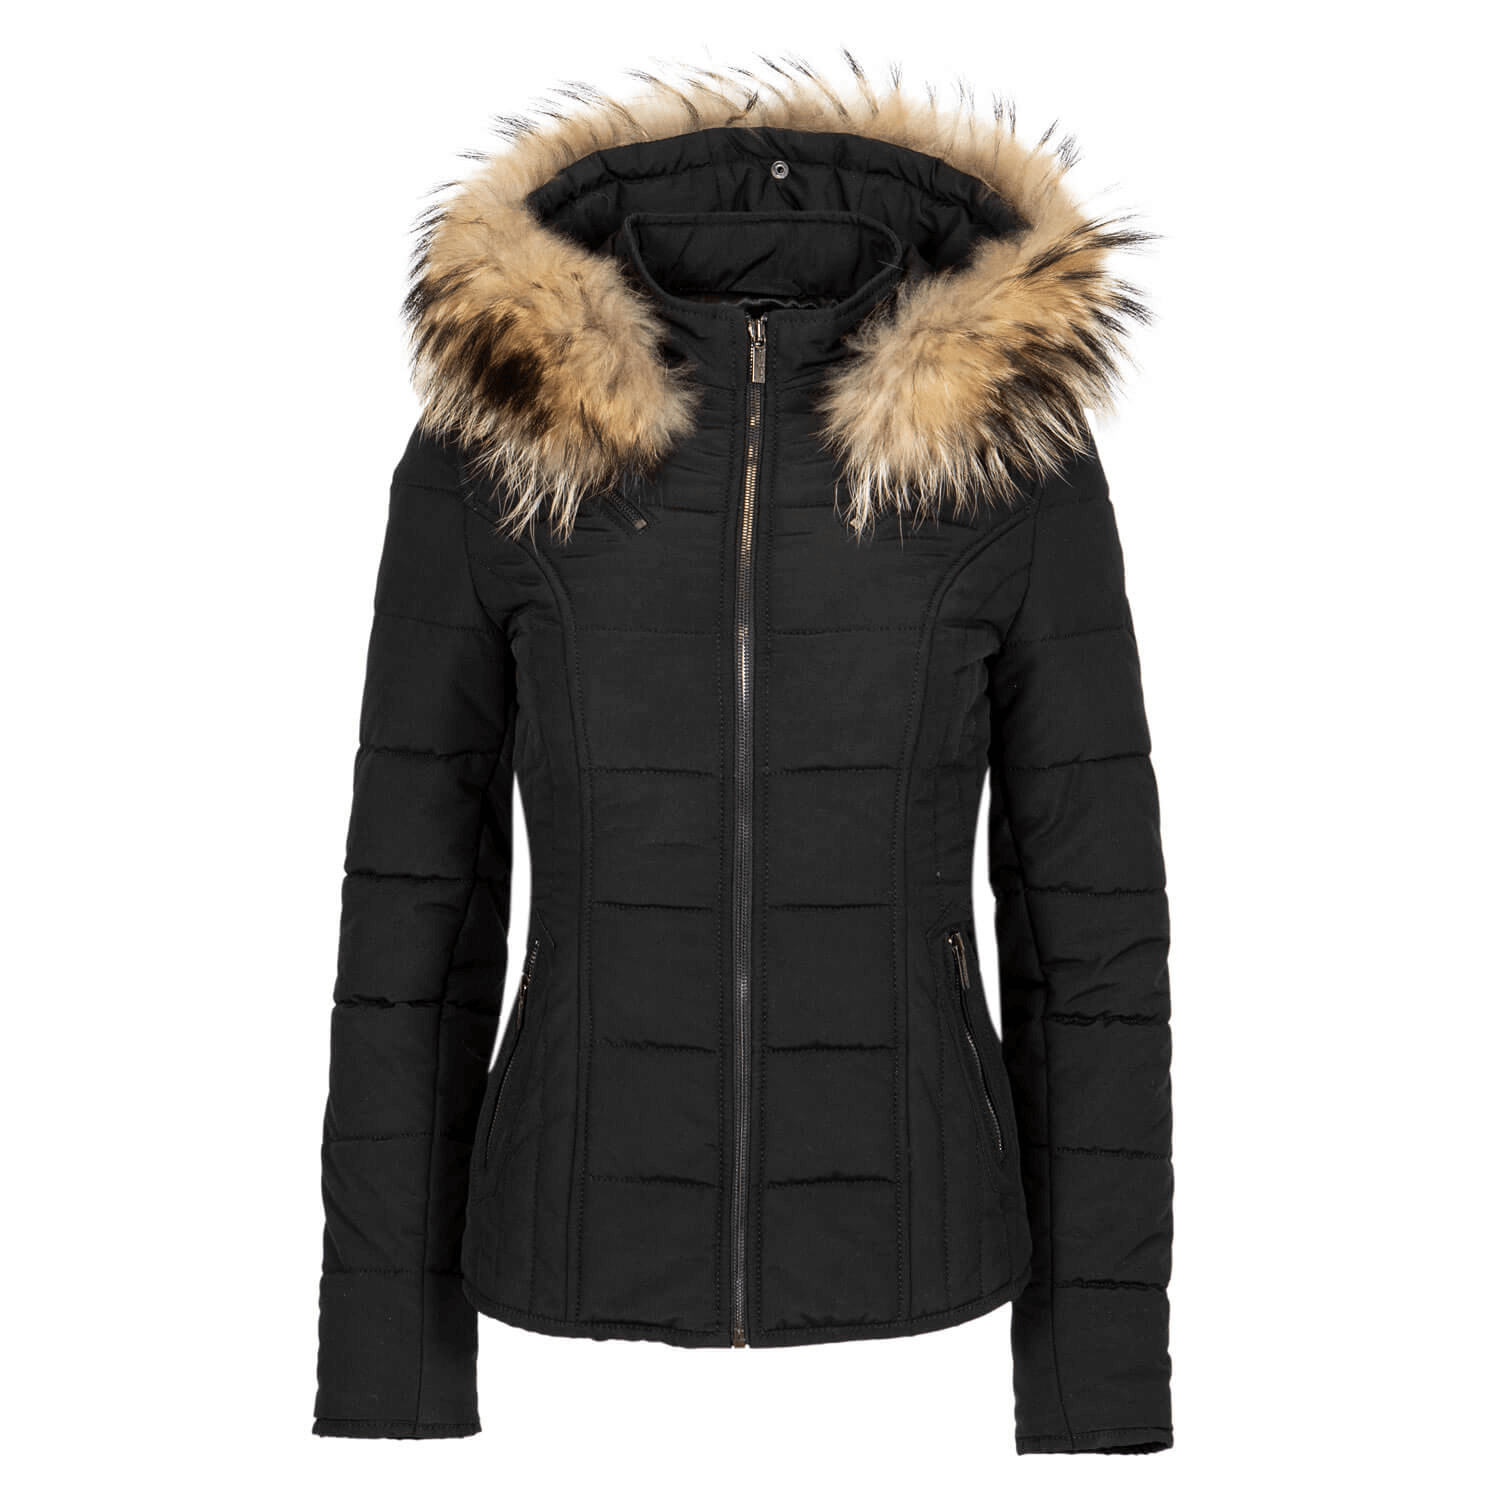 Womens winter puffer jacket black 009